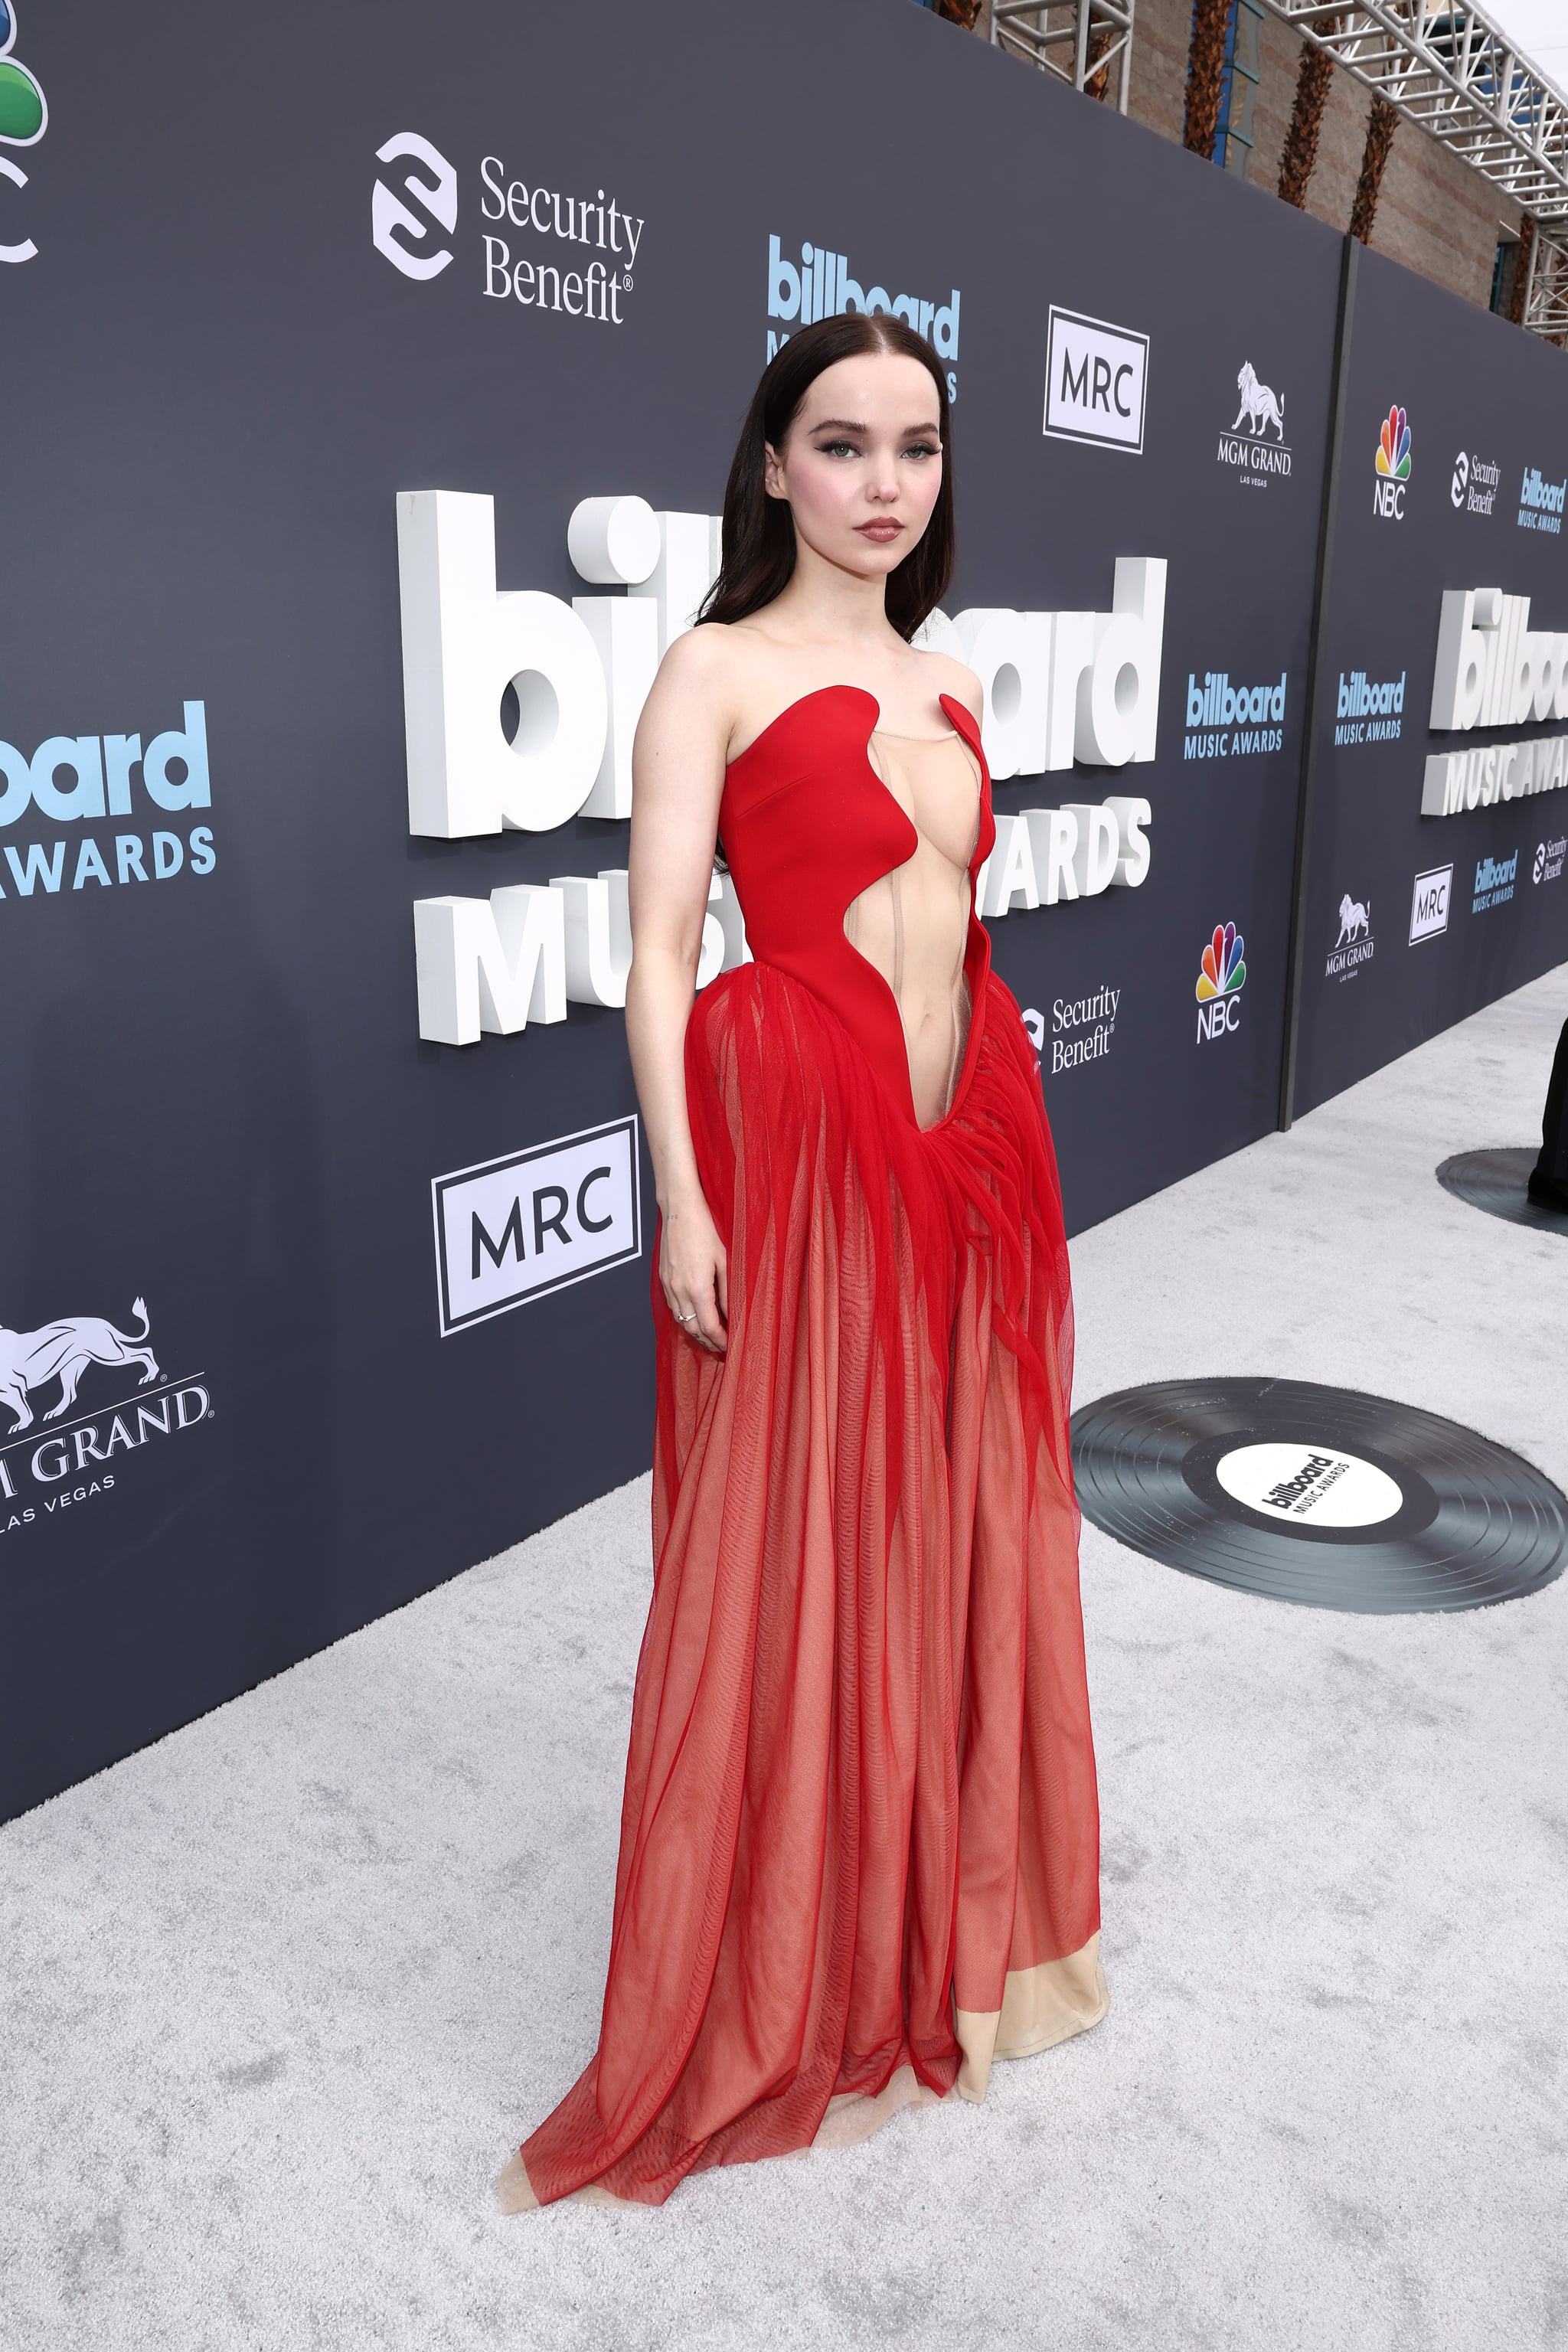 Dove Cameron's Red Dress at Billboard Awards | POPSUGAR Fashion